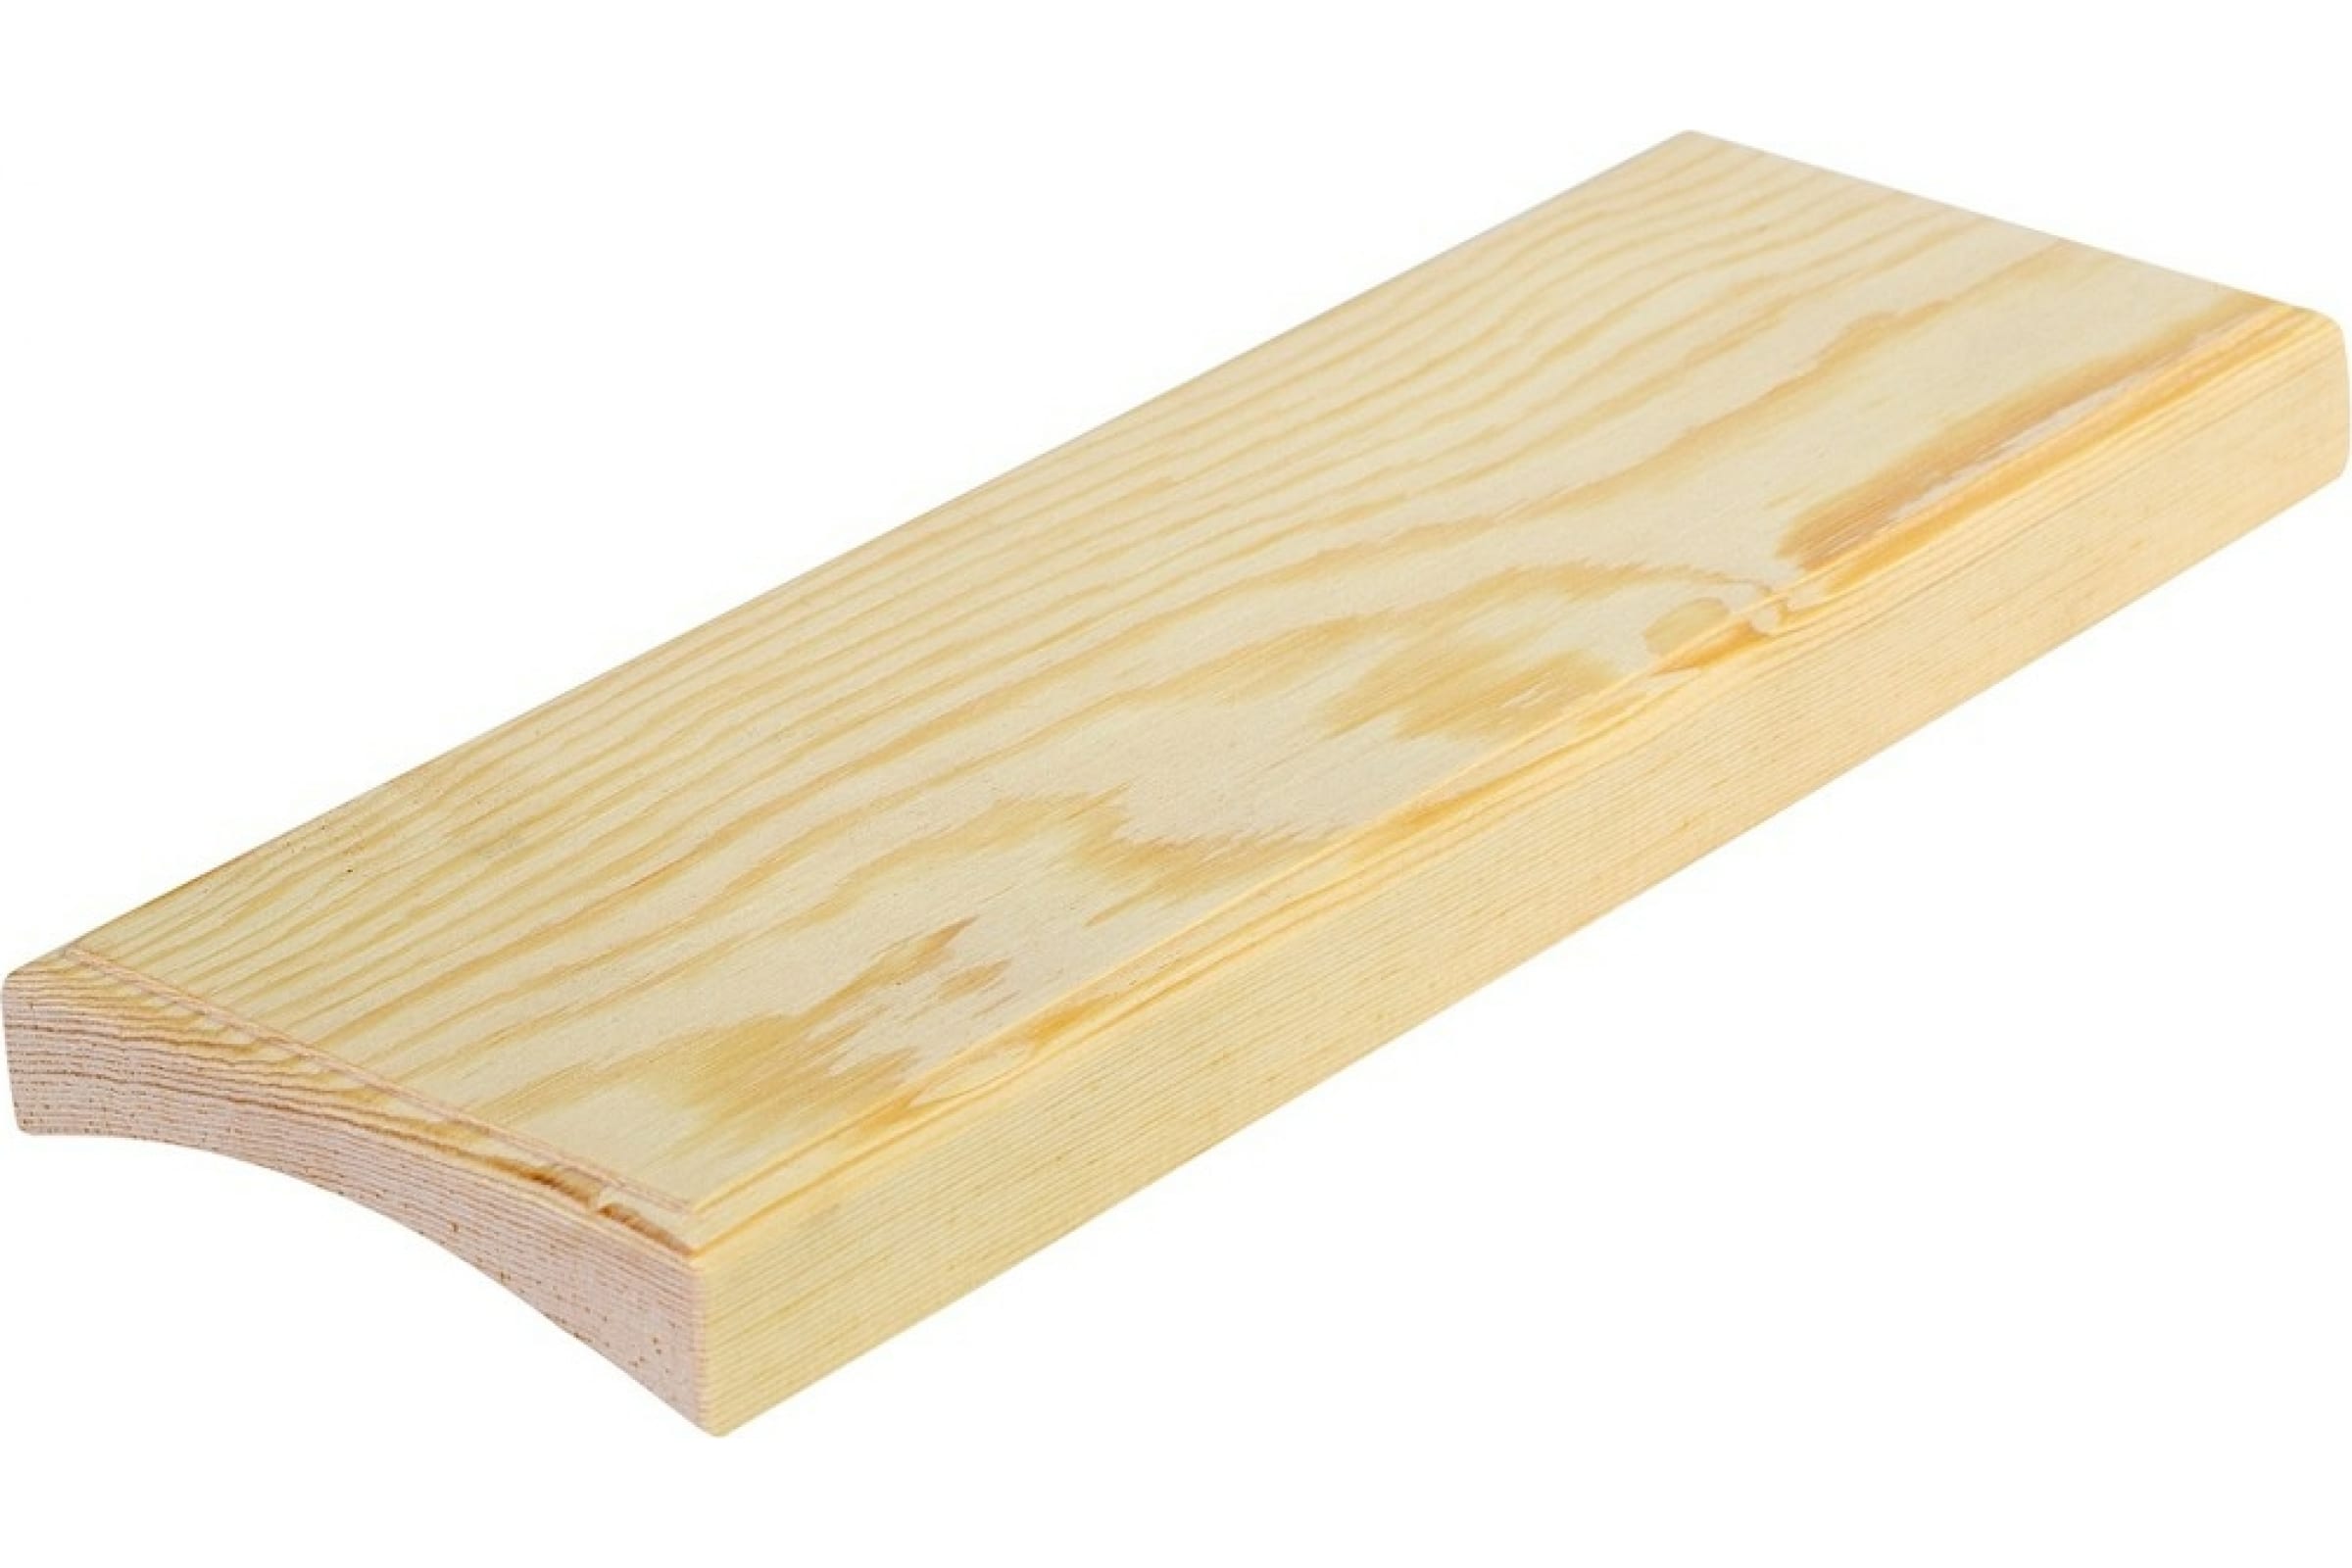 TDM Накладка на бревно деревянная универсальная НБУ 1Пх4 280 мм, под покраску SQ1821-0329 деревянная универсальная накладка на бревно tdm